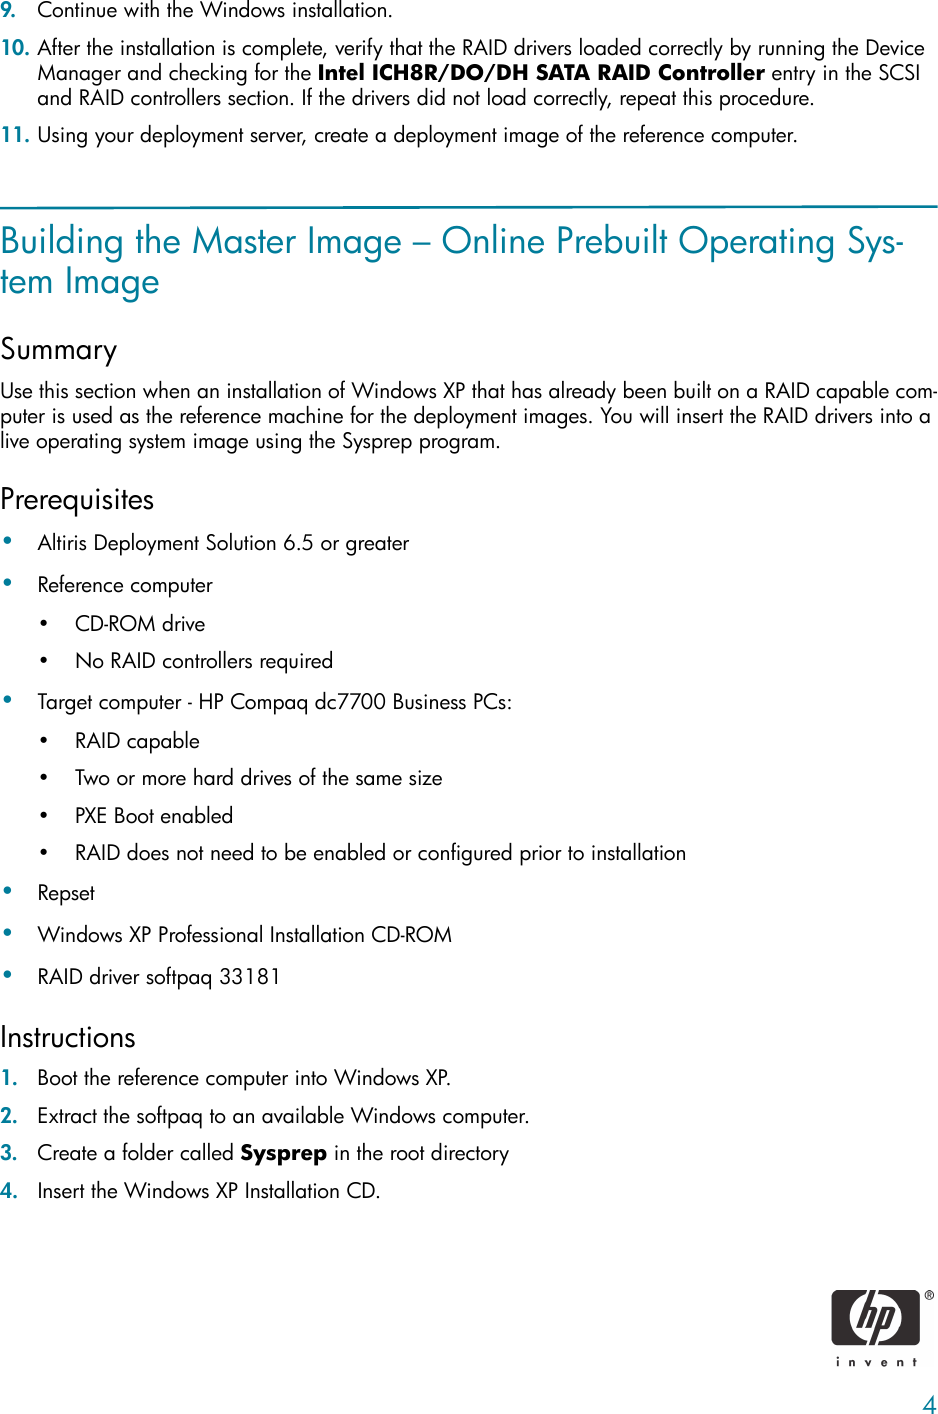 Page 4 of 7 - HP RAID Image Deployment On Compaq Dc7000 Series Business PCs C00767036